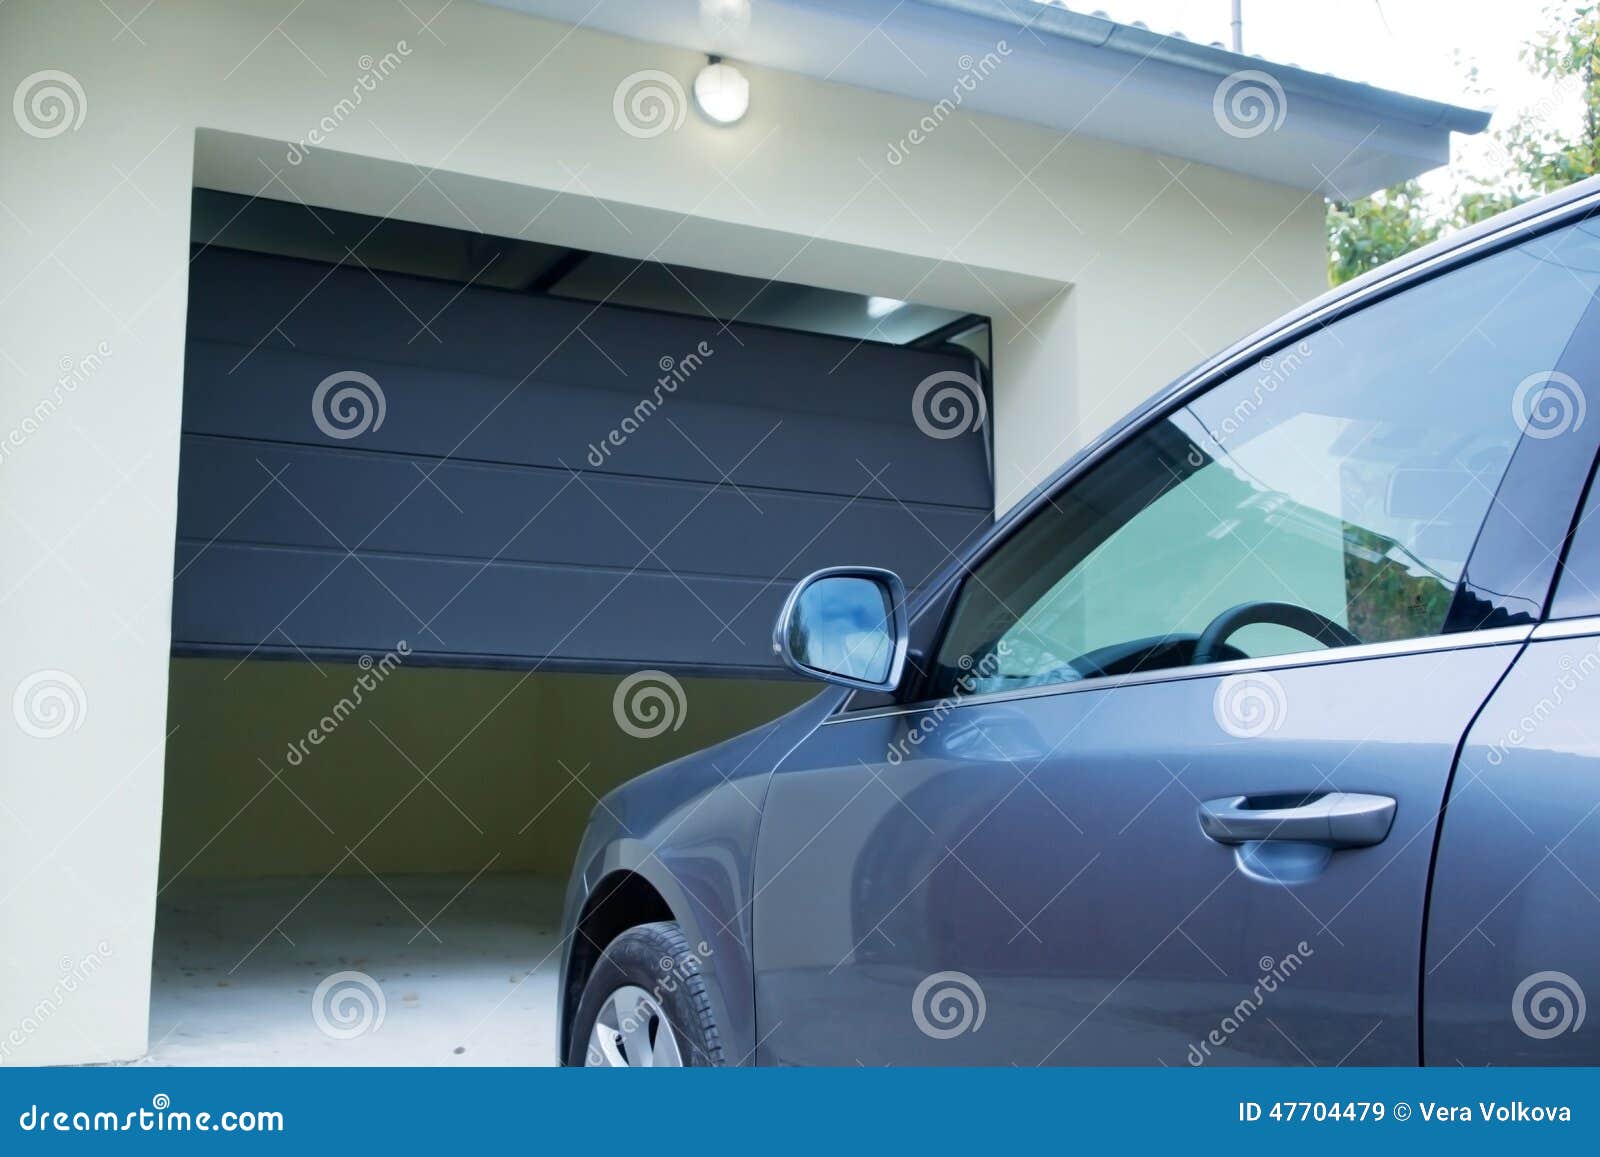 car near the automatic garage door